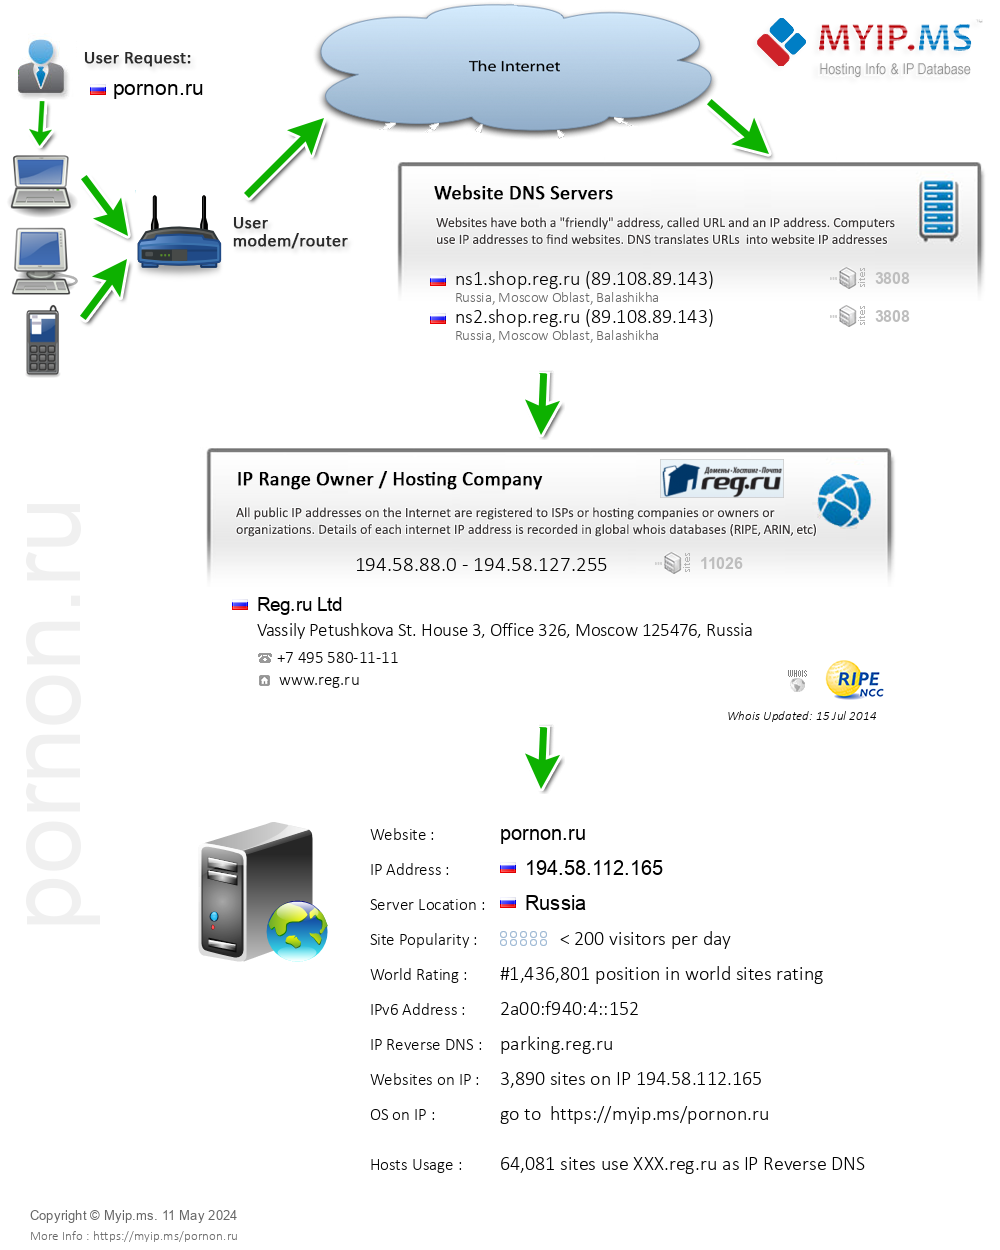 Pornon.ru - Website Hosting Visual IP Diagram